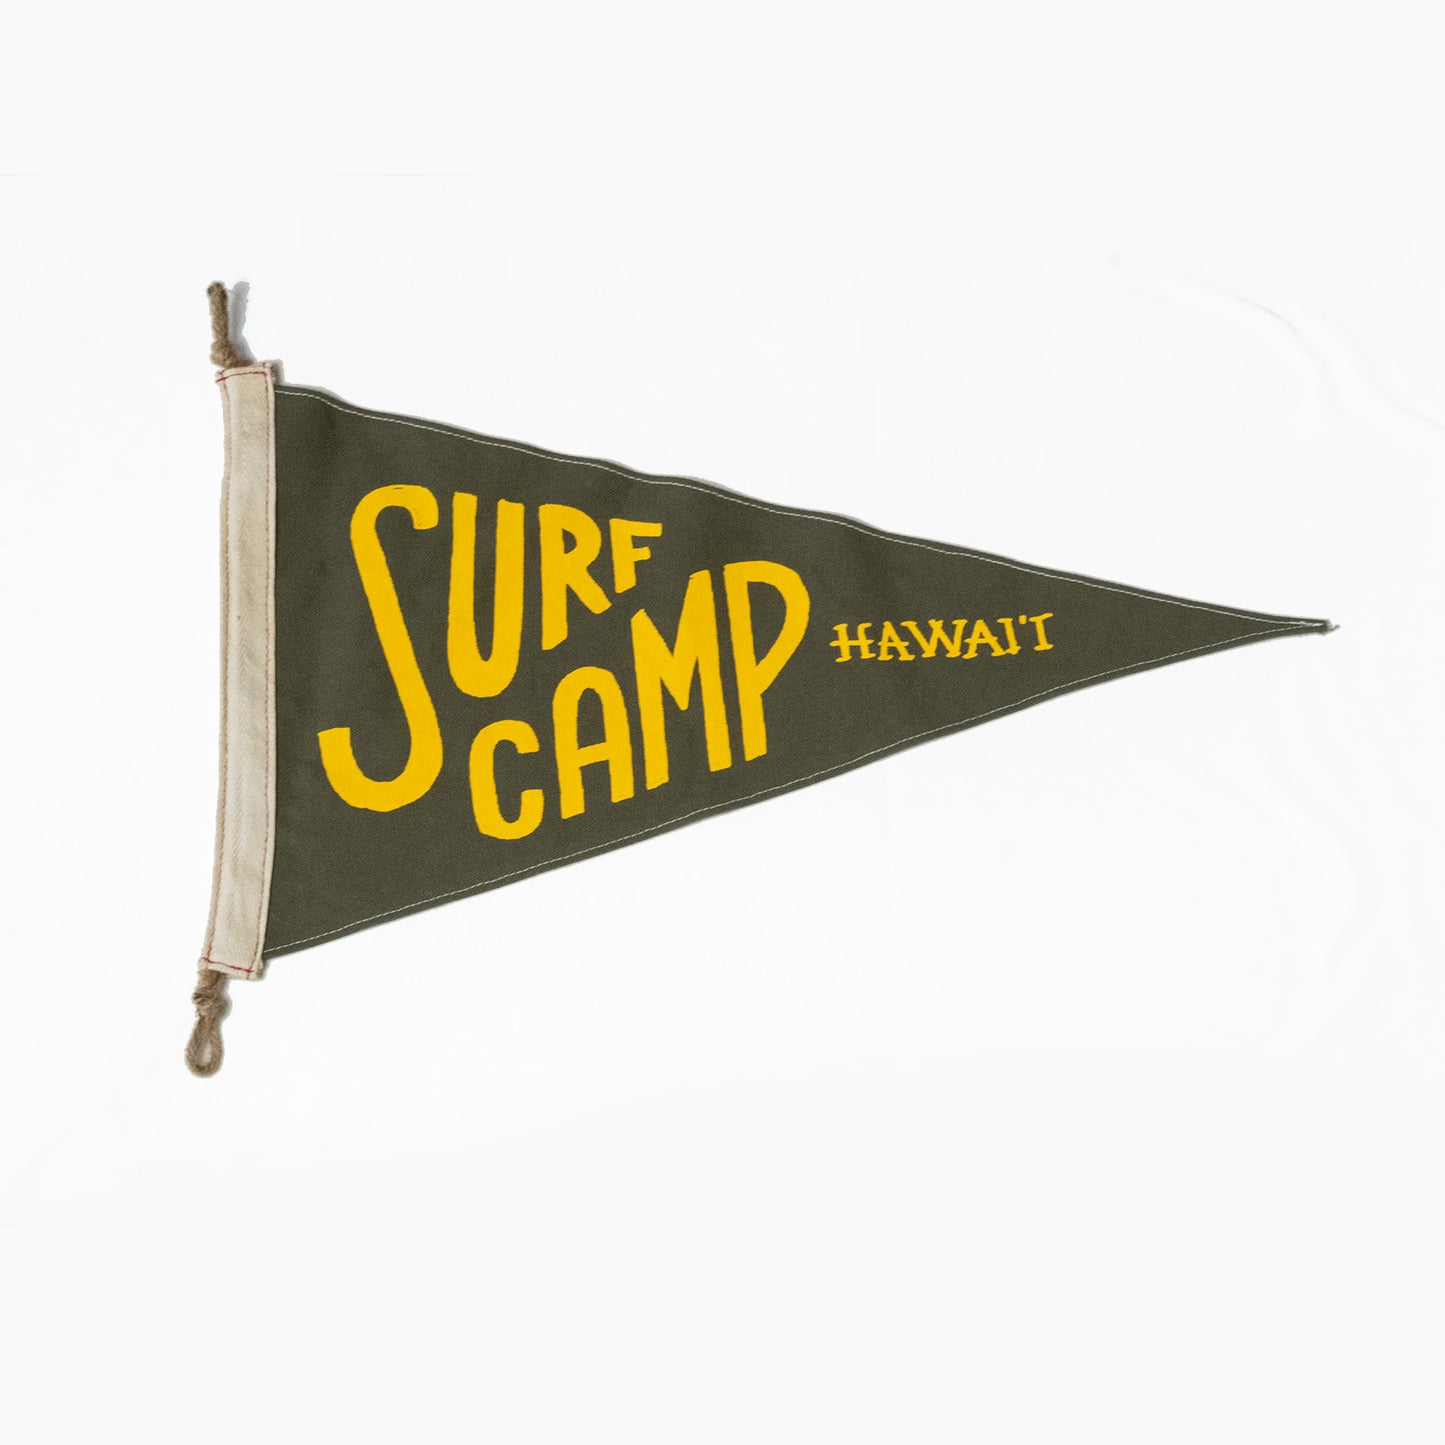 Slightly Choppy x Surf Camp Flag